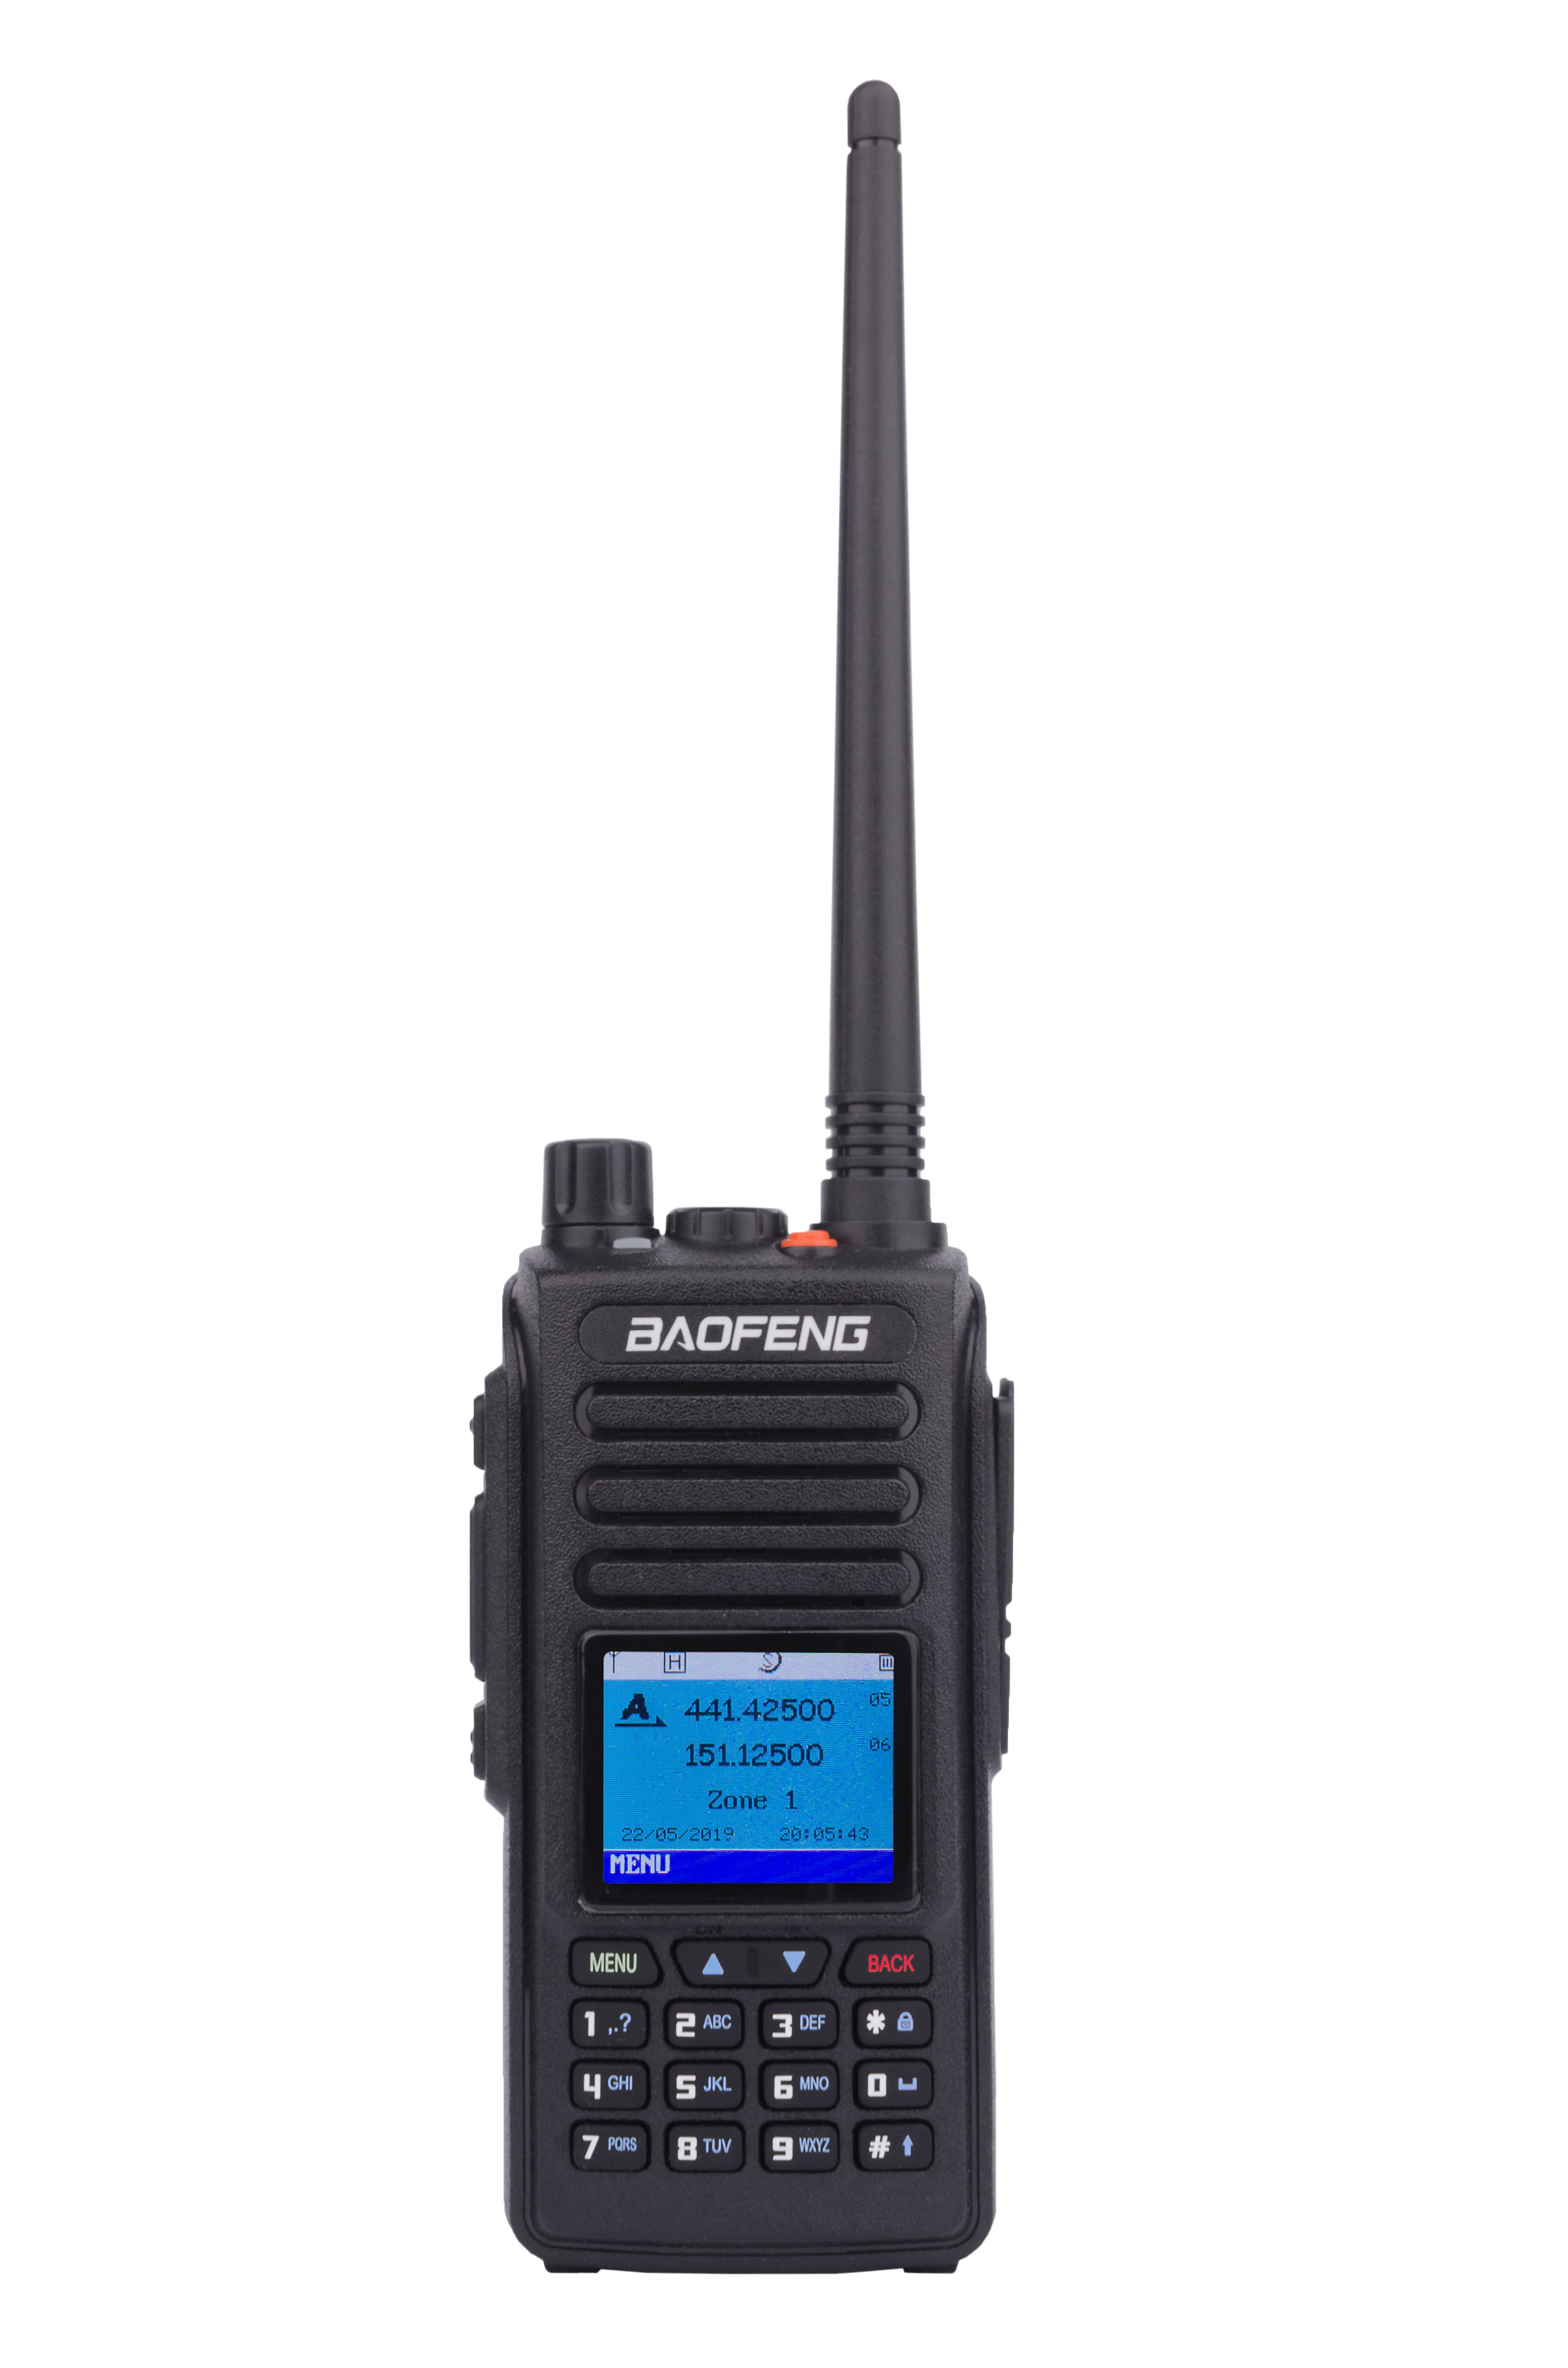 Baofeng DM-1702 Portable DMR Radio with GPS